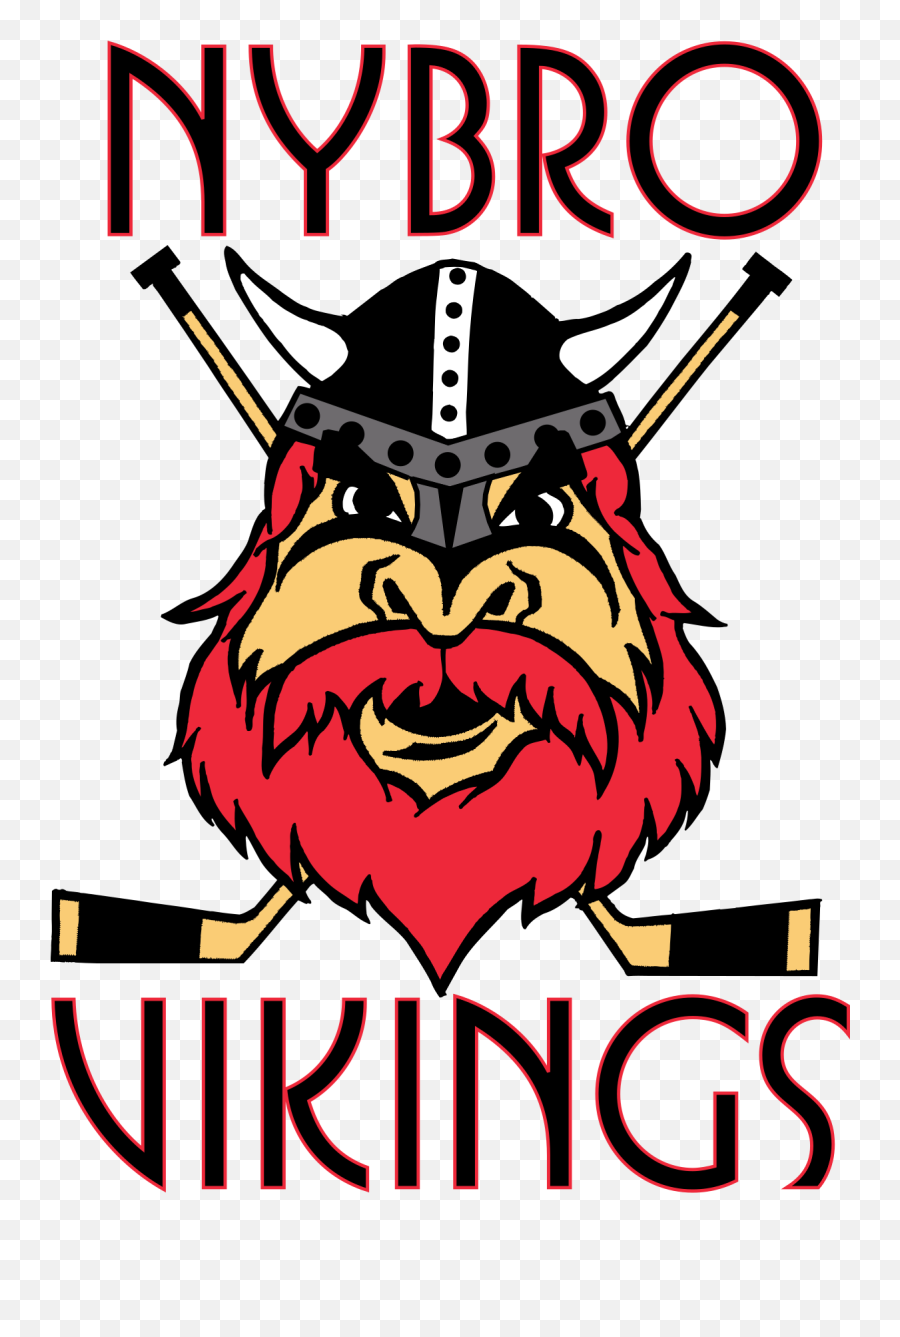 Nybro Vikings - Wikipedia Nybro Vikings Logo Png,Vikings Logo Png